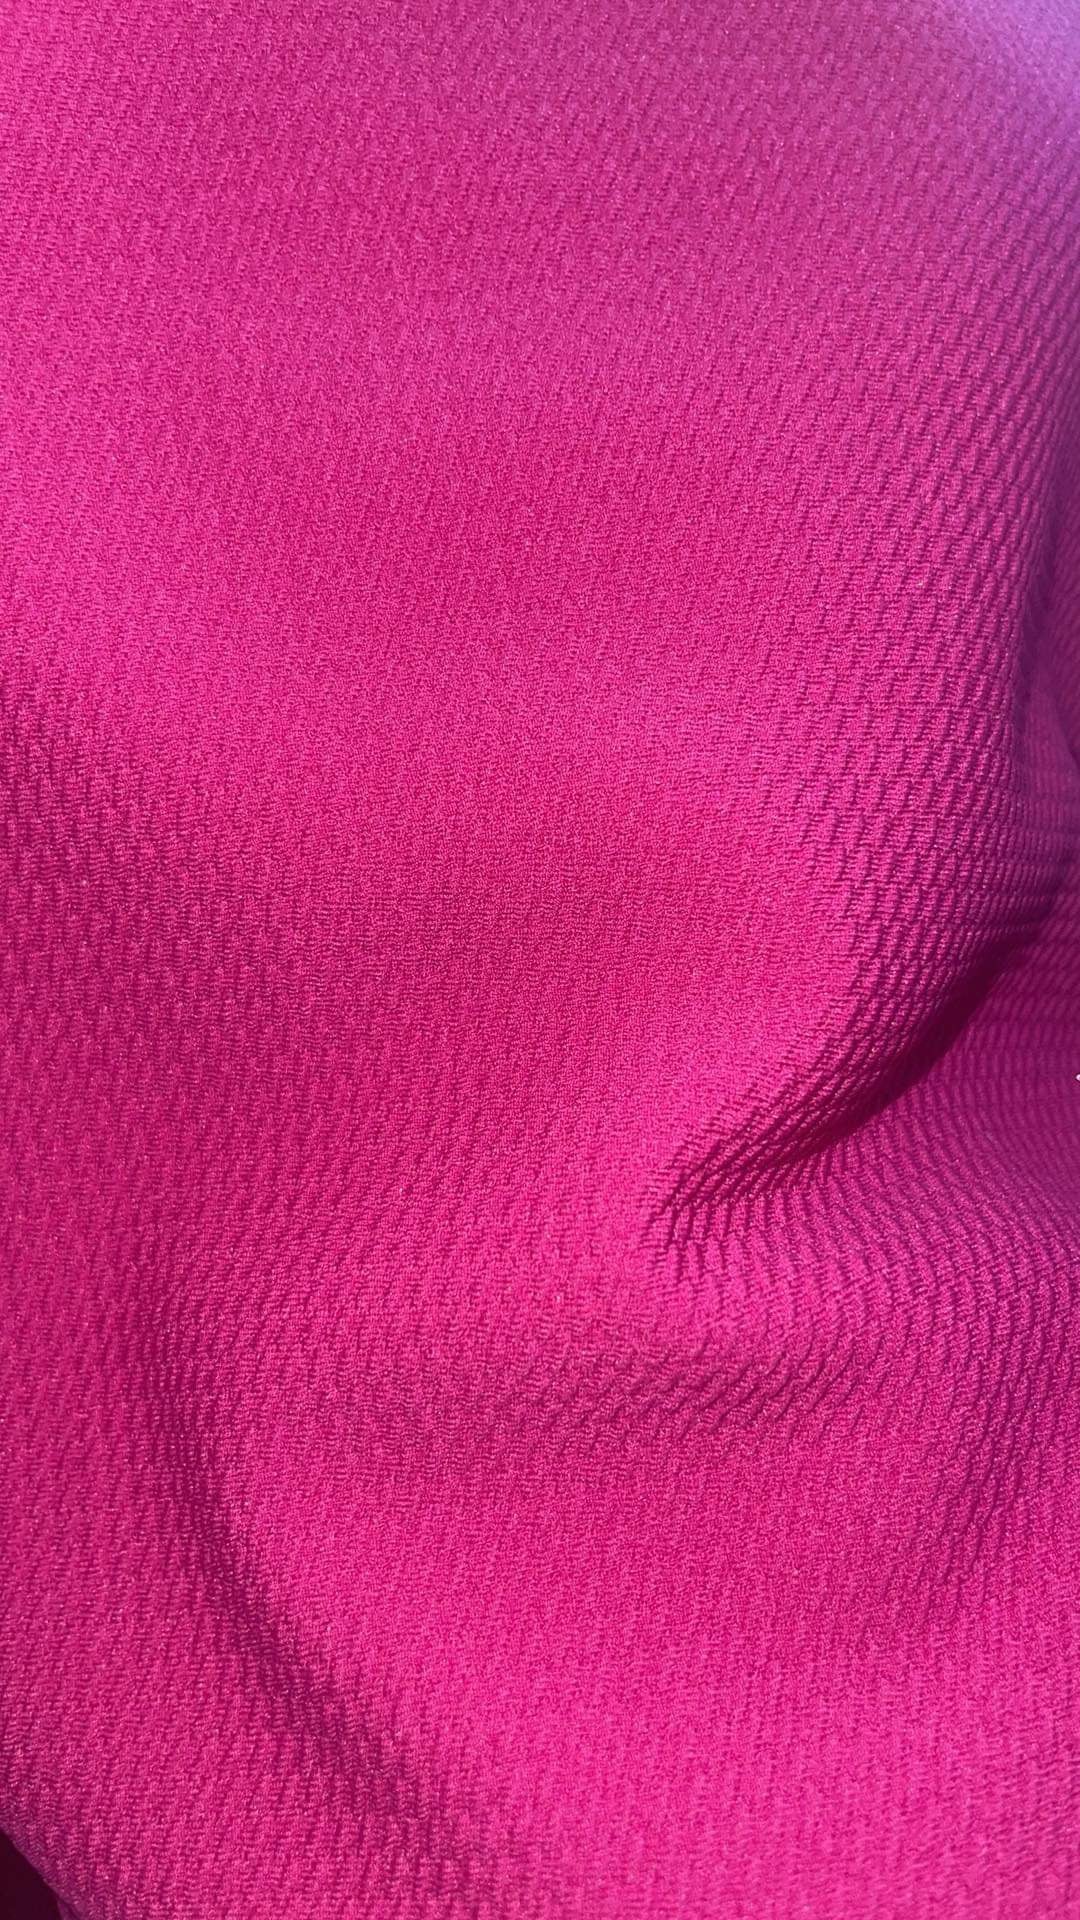 Solids - Magenta Pink